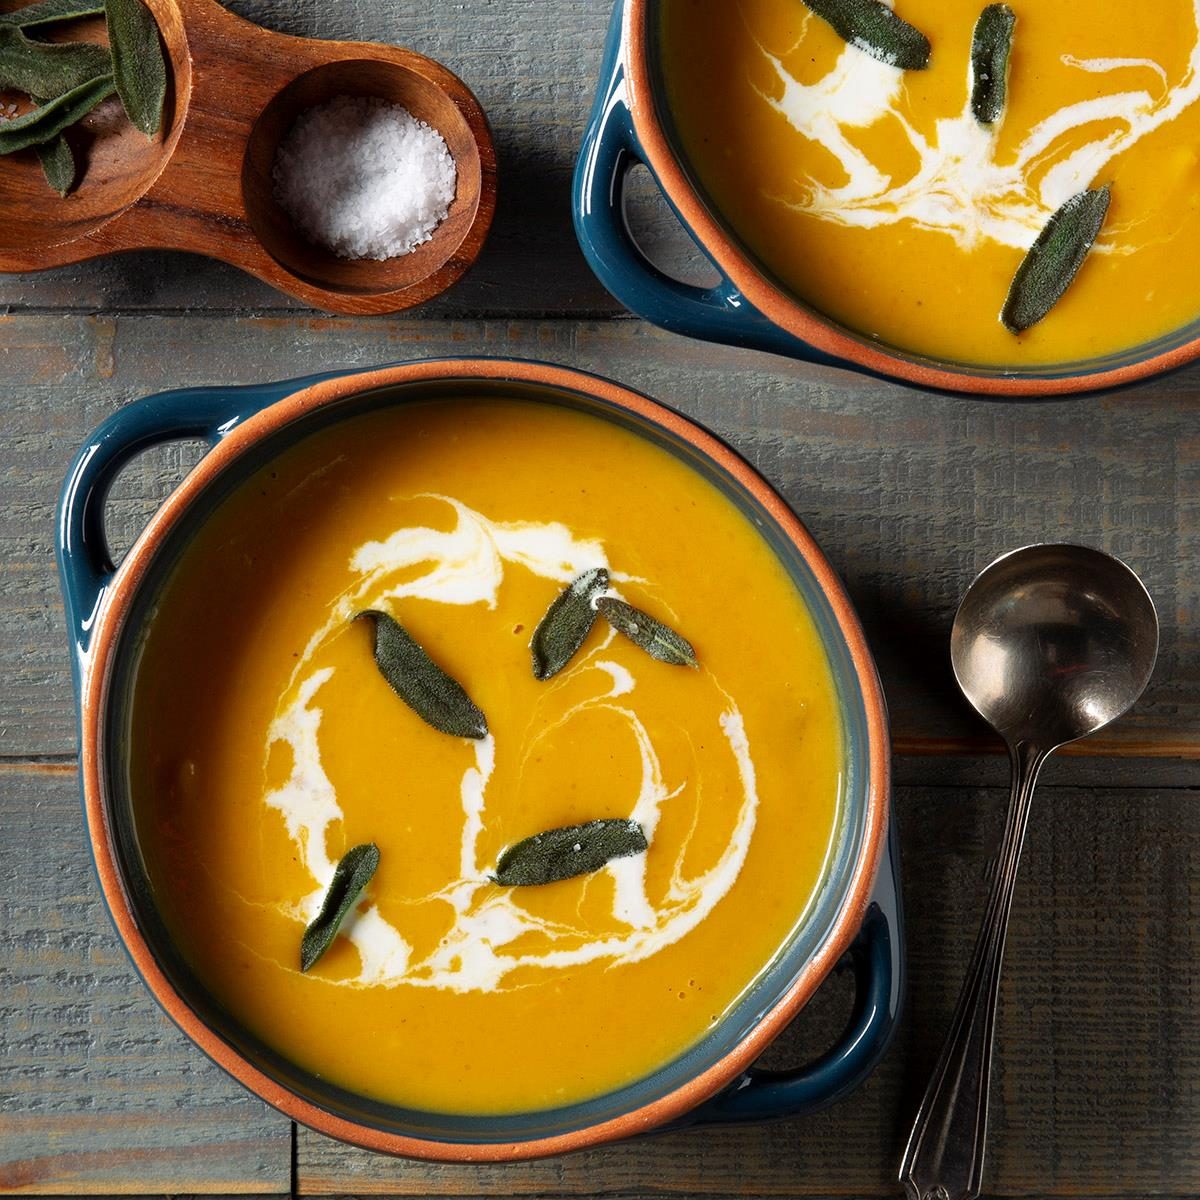 October 2: Easy Butternut Squash Soup